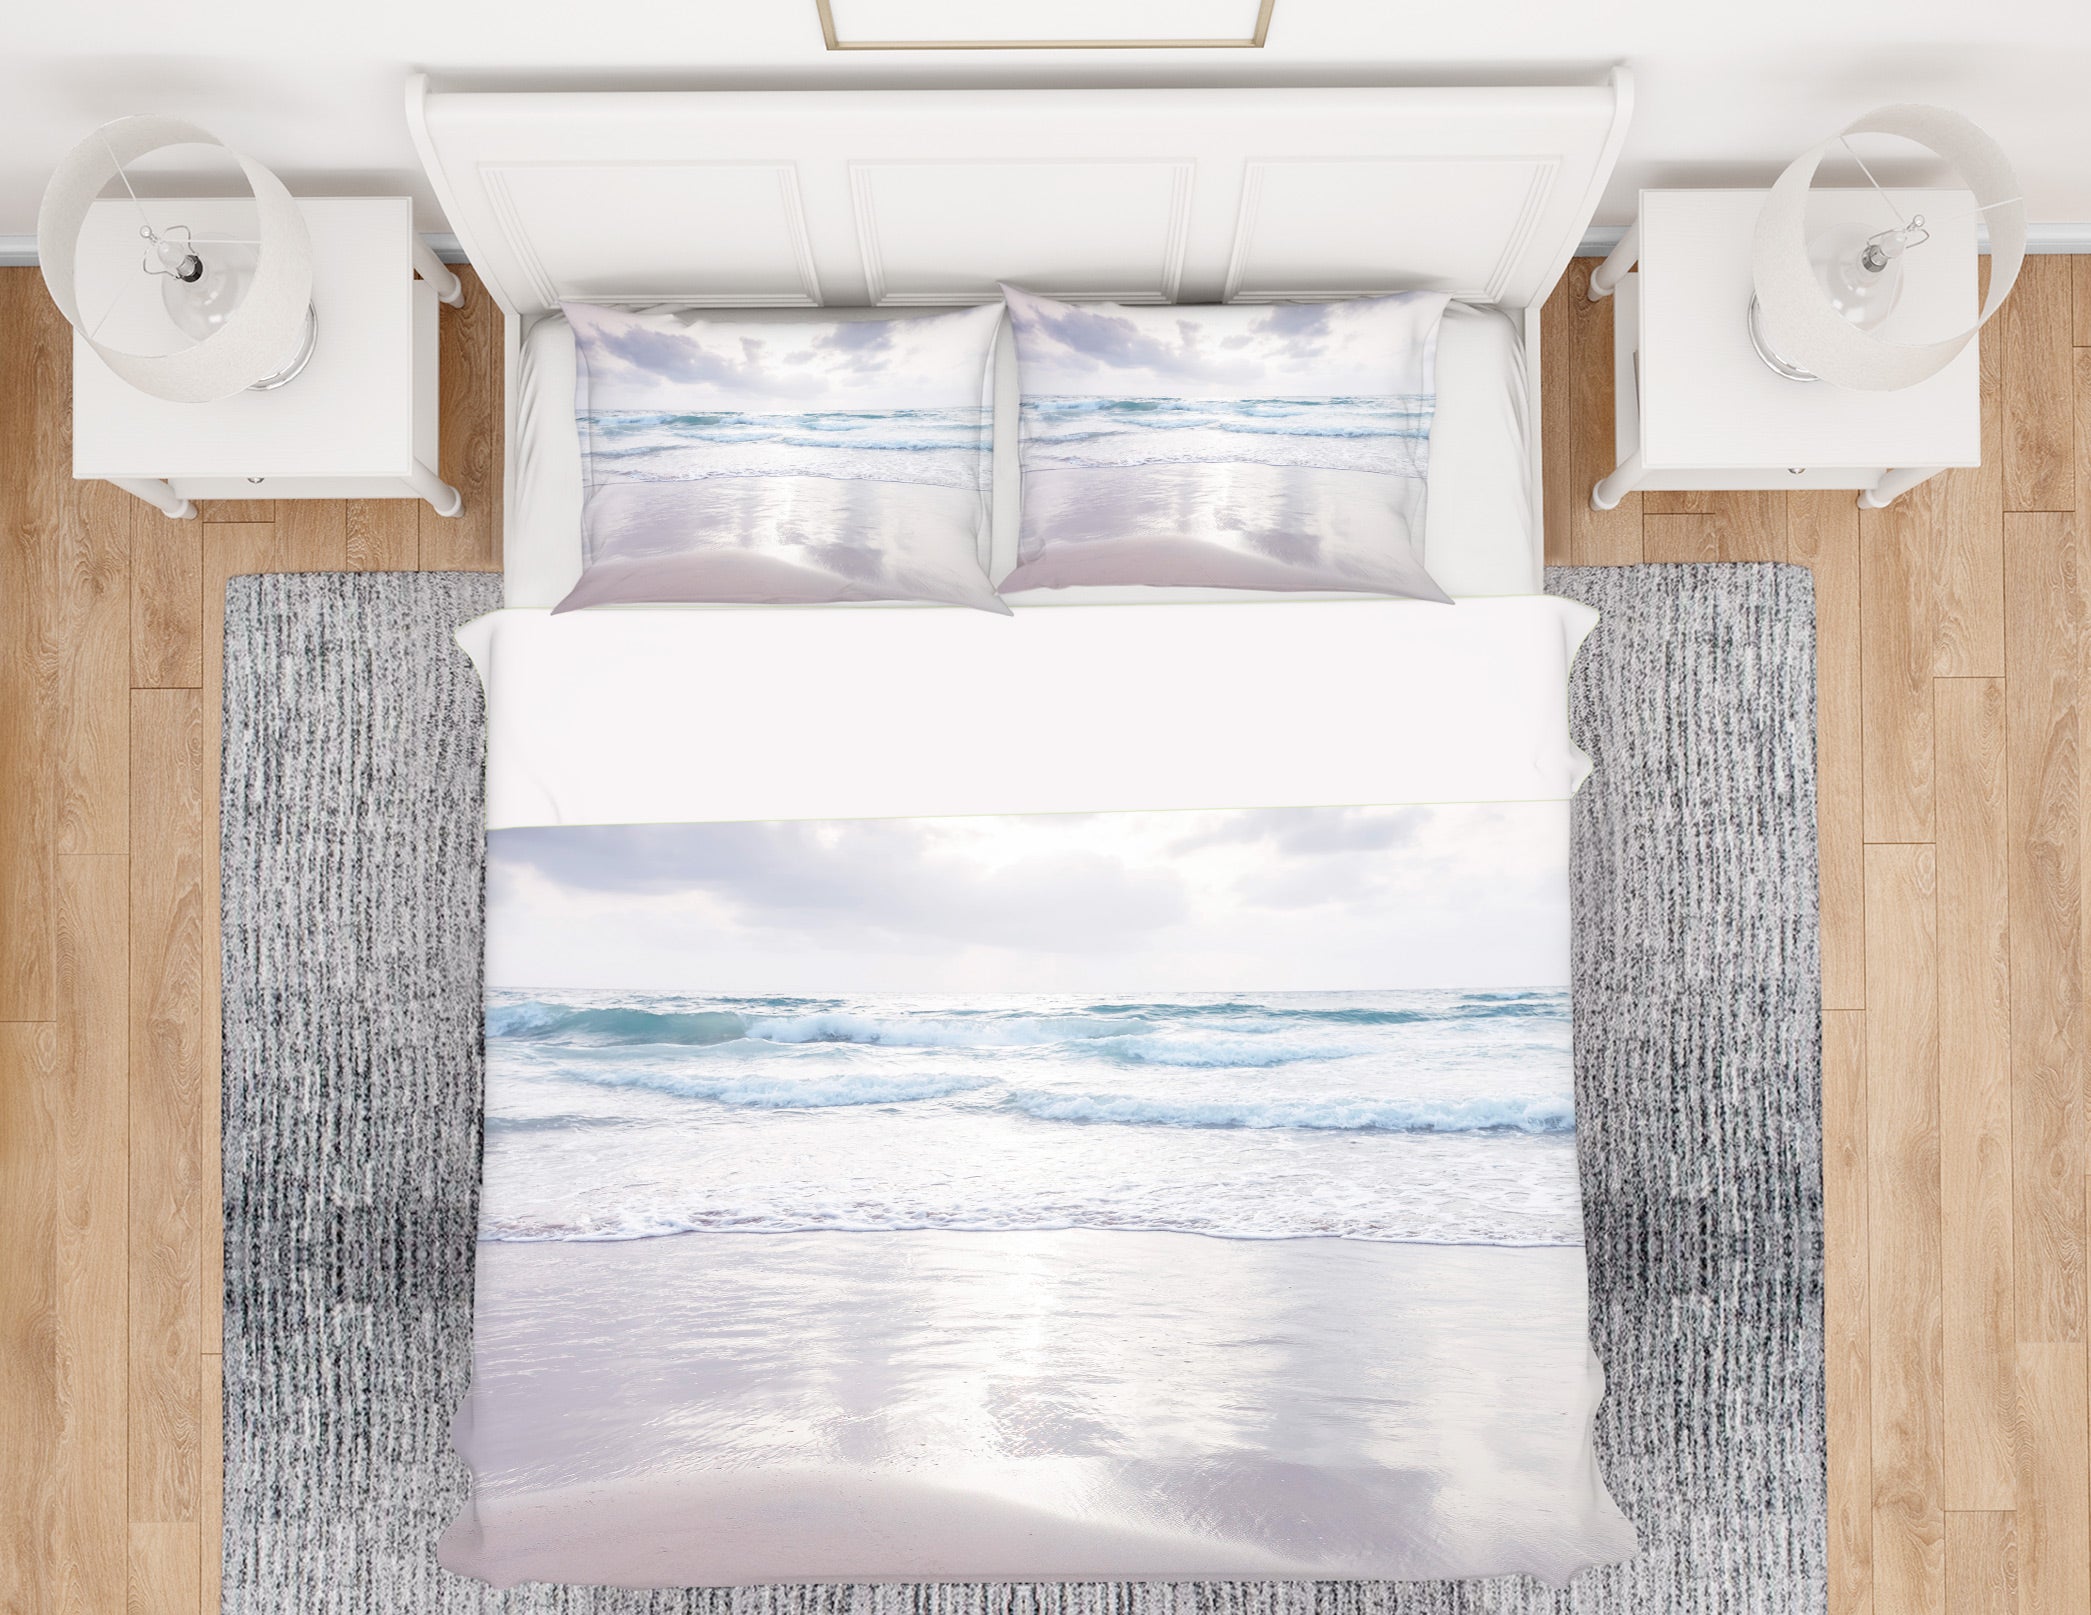 3D Beach Waves 6919 Assaf Frank Bedding Bed Pillowcases Quilt Cover Duvet Cover